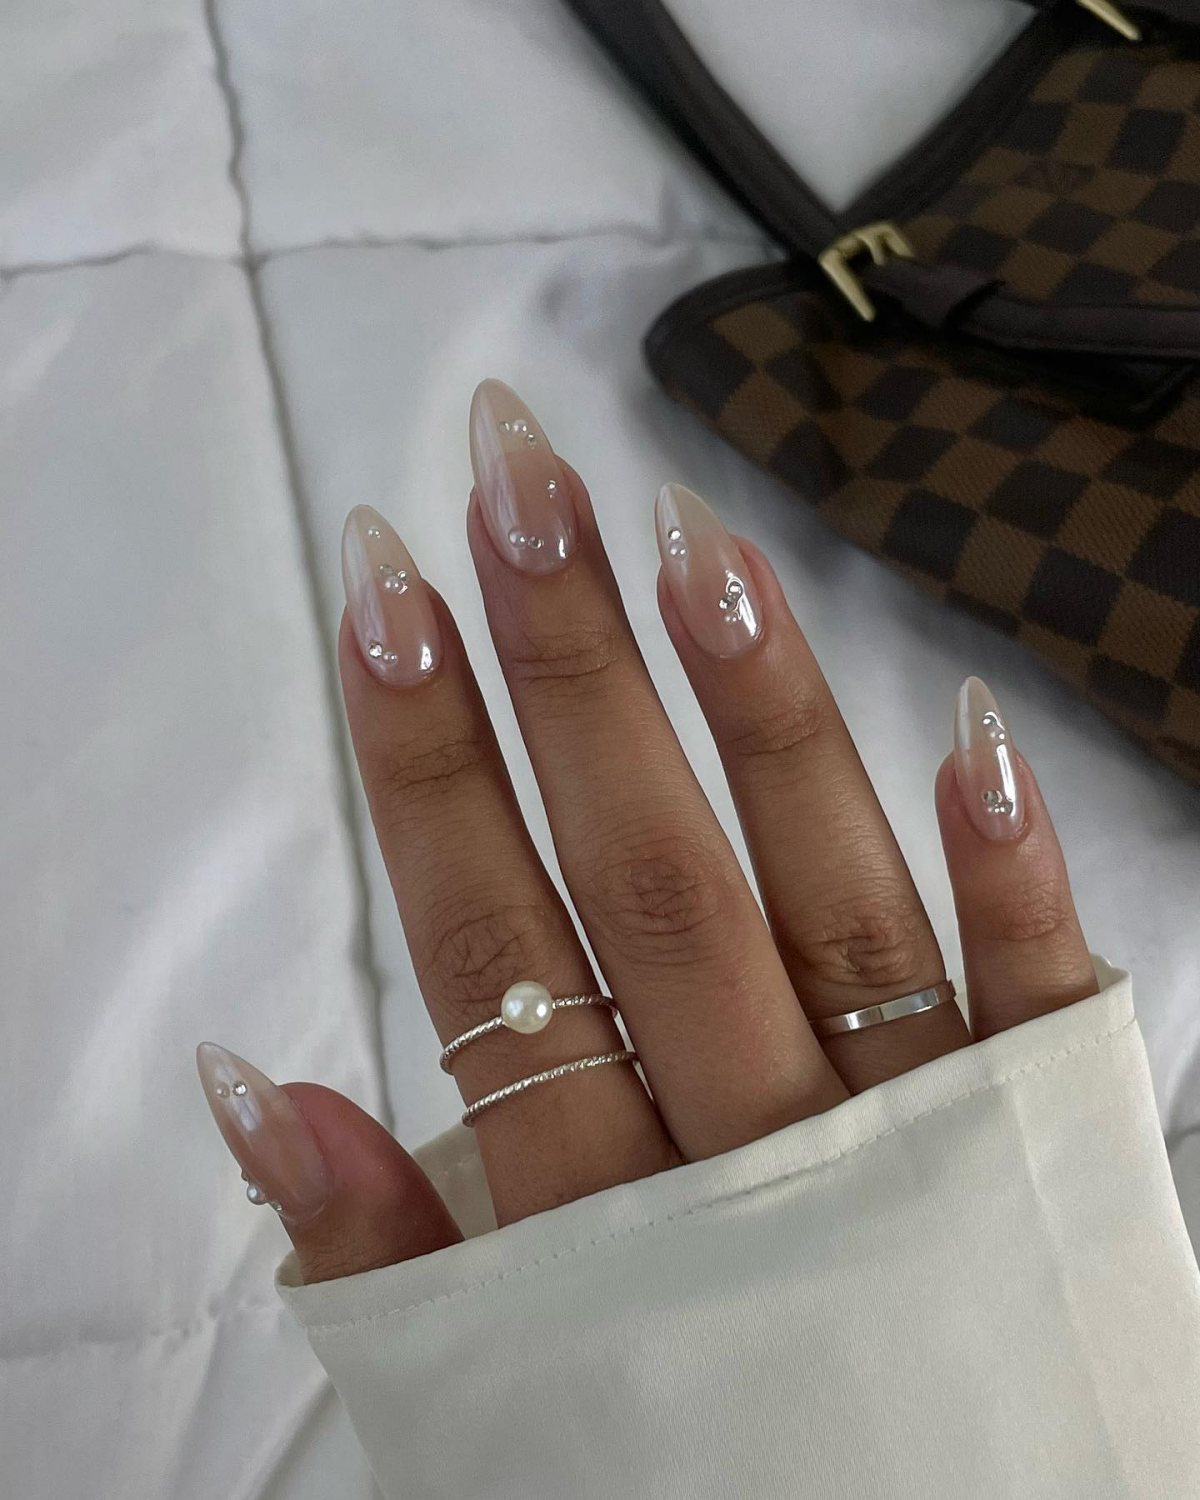 glazed nails with stones